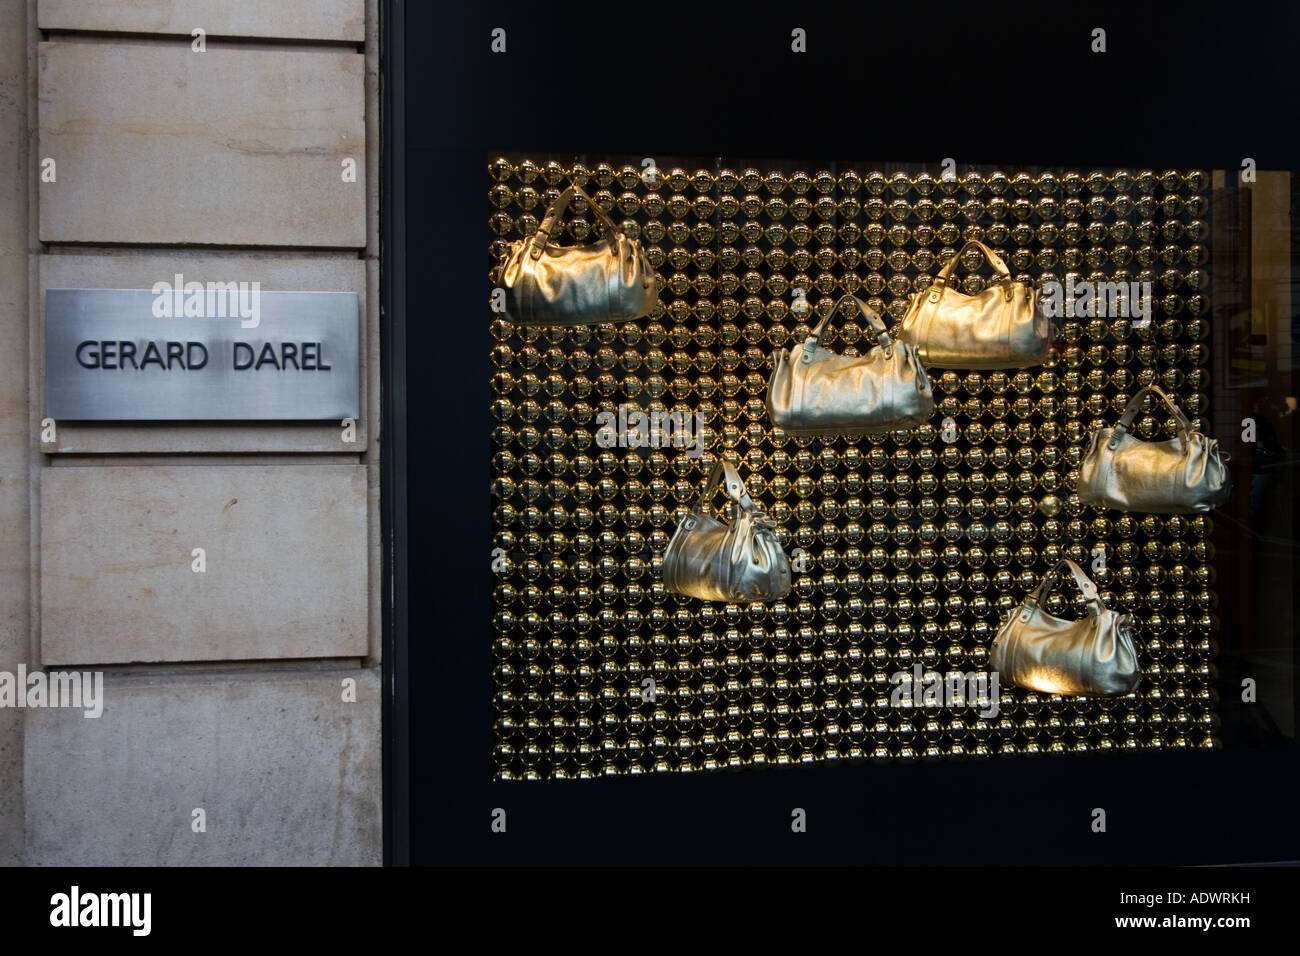 Gerard Darel shop window in Boulevard Saint Germain Paris France Stock  Photo - Alamy